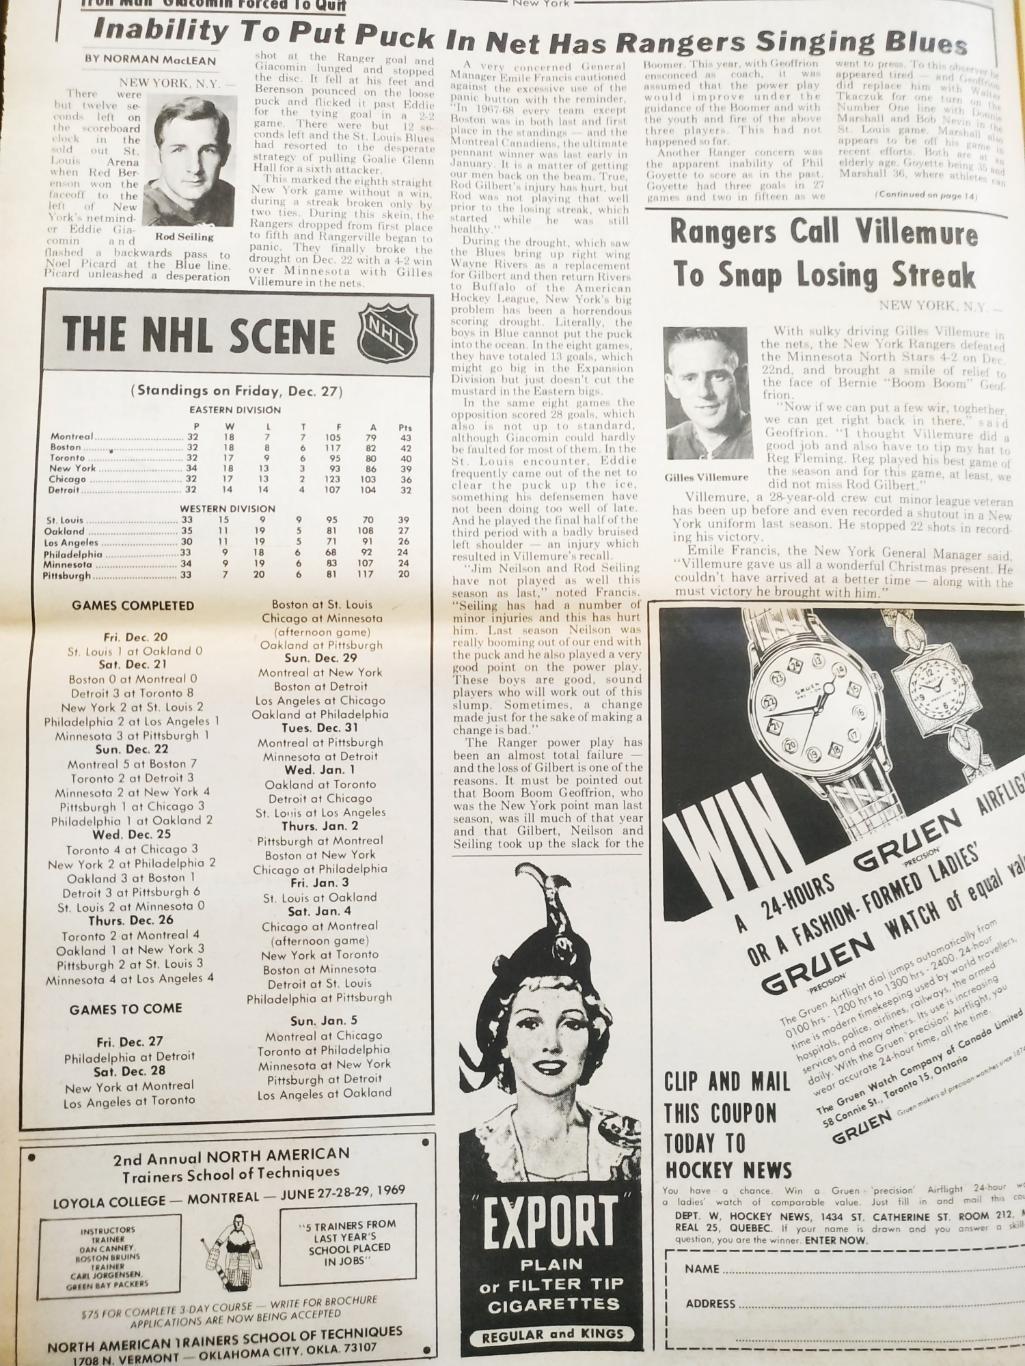 ХОККЕЙ ЖУРНАЛ ЕЖЕНЕДЕЛЬНИК НХЛ НОВОСТИ ХОККЕЯ JAN.4 1969 NHL THE HOCKEY NEWS 1